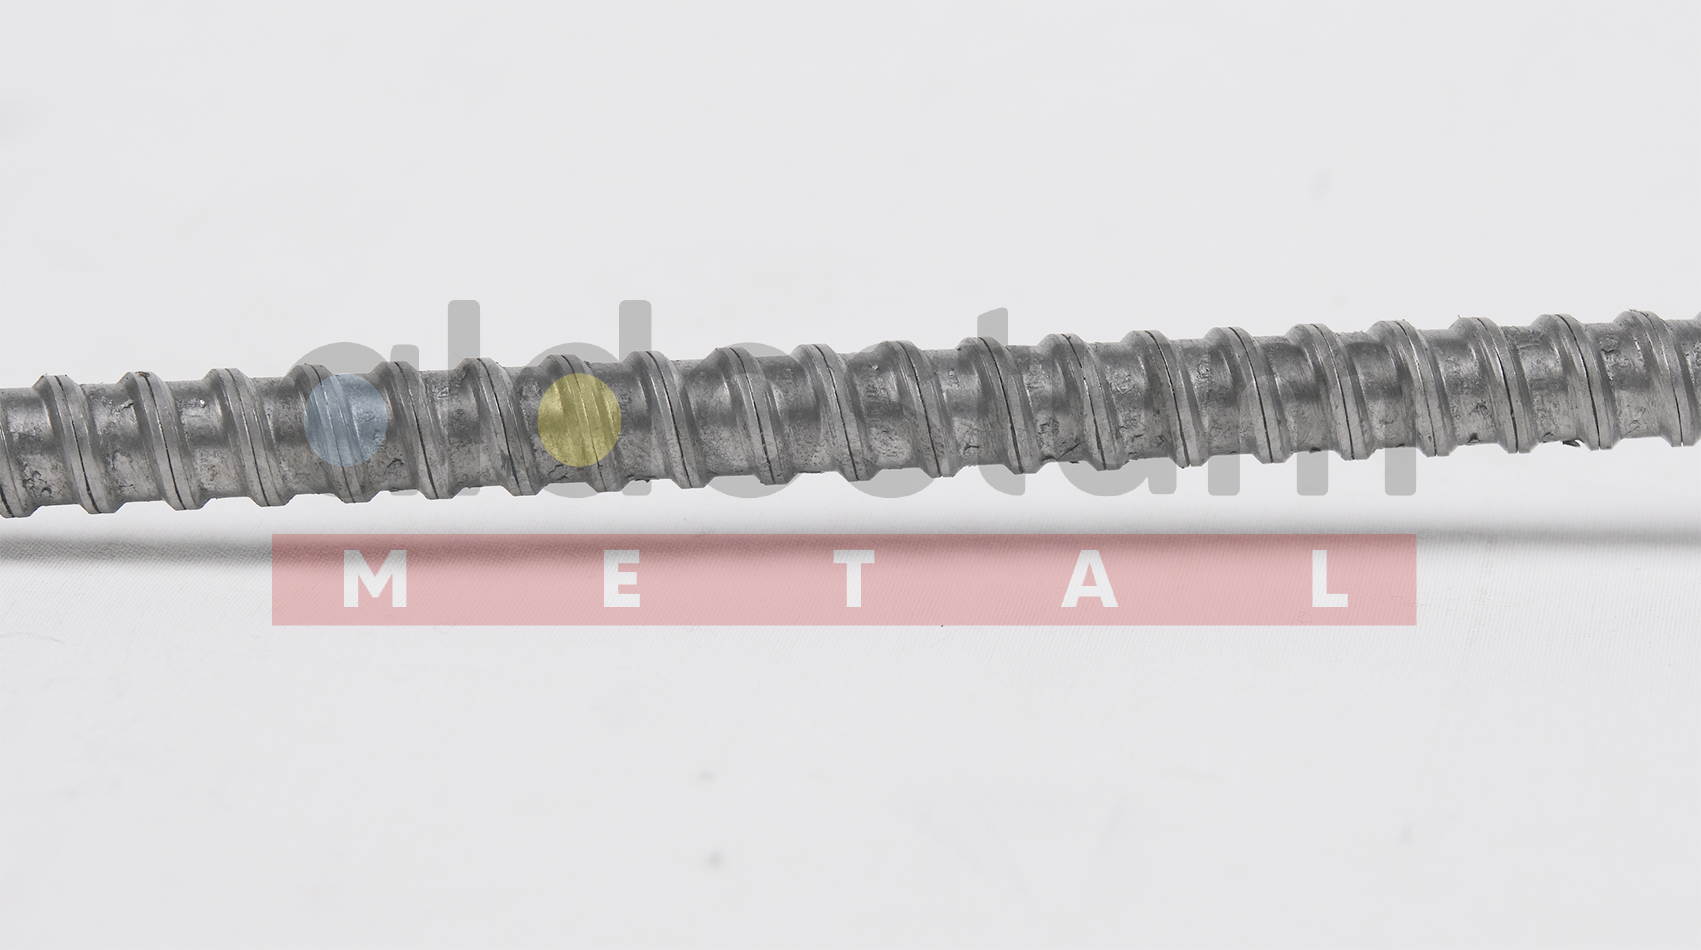 Tayrot (Tie-Rot) Mili 1 Metre - Çelik Mil